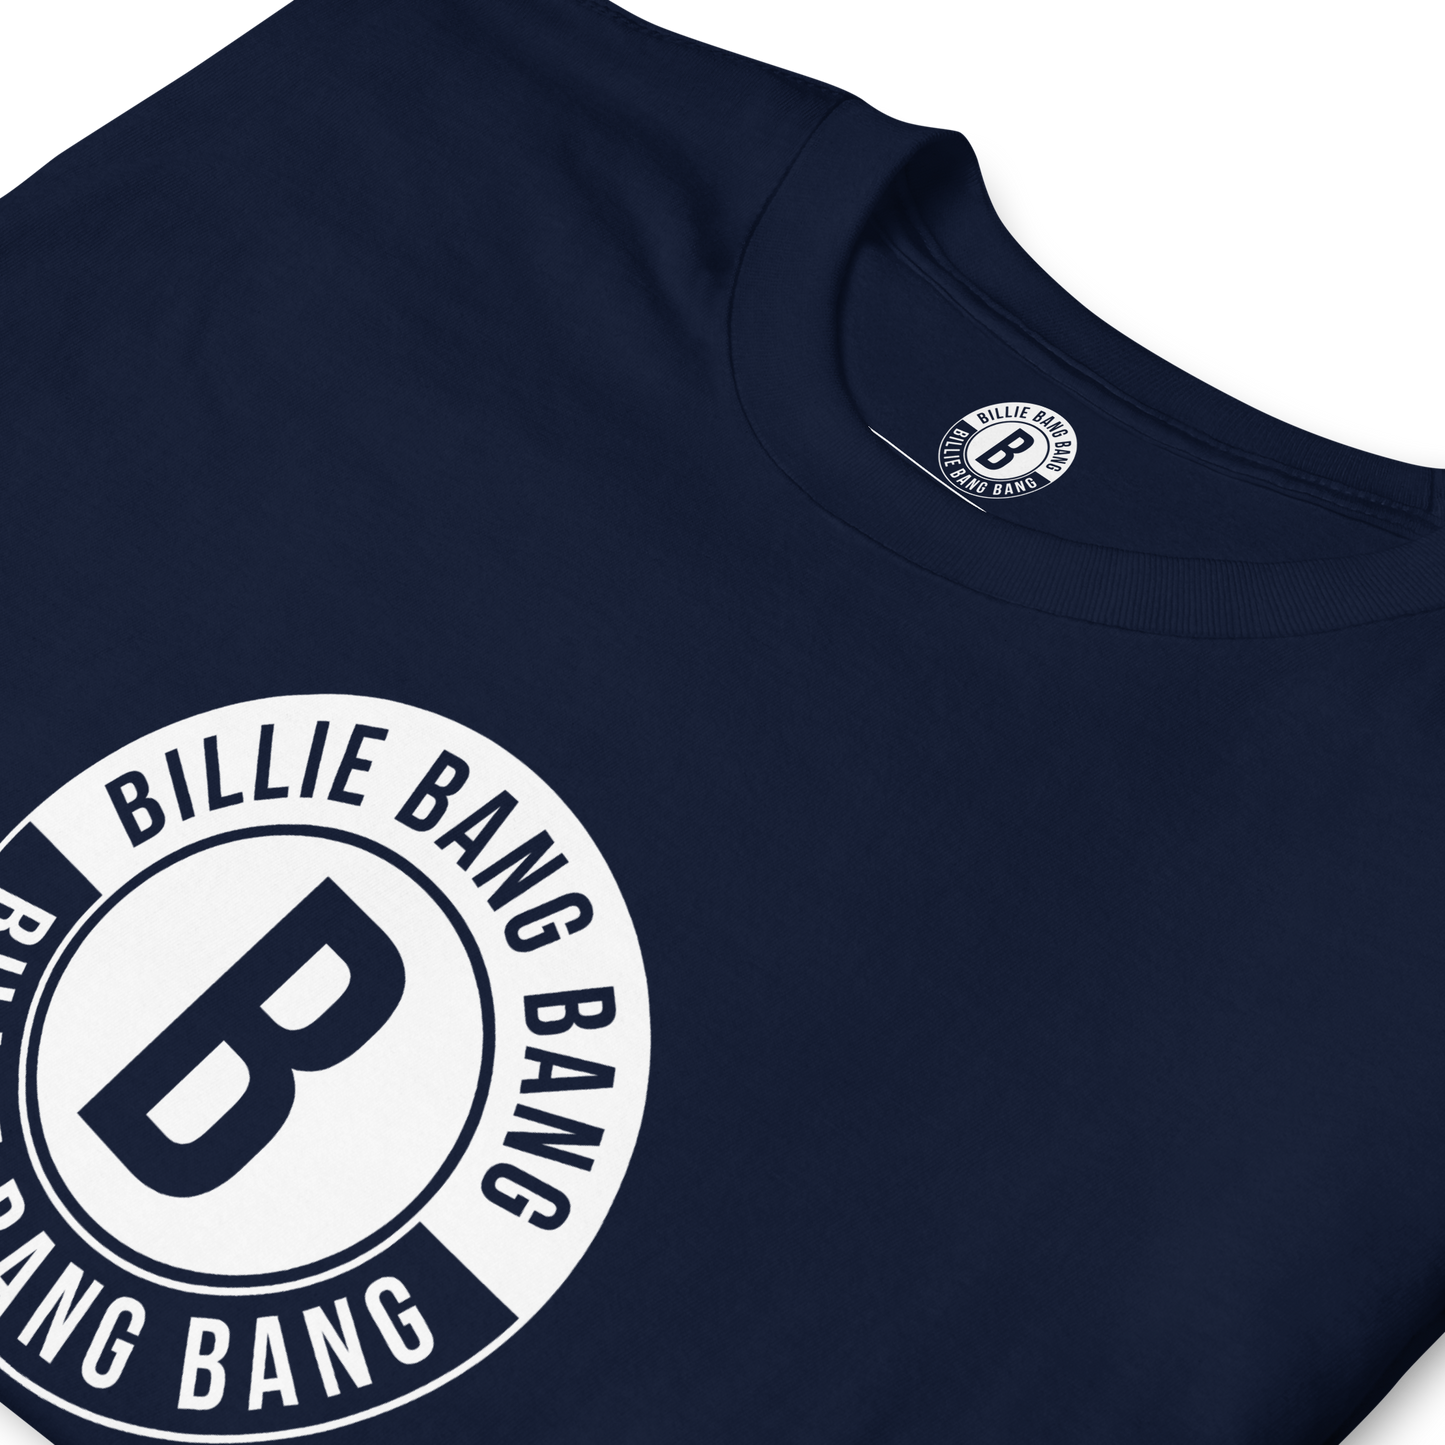 ORIGINAL - Billie Bang Bang Tee